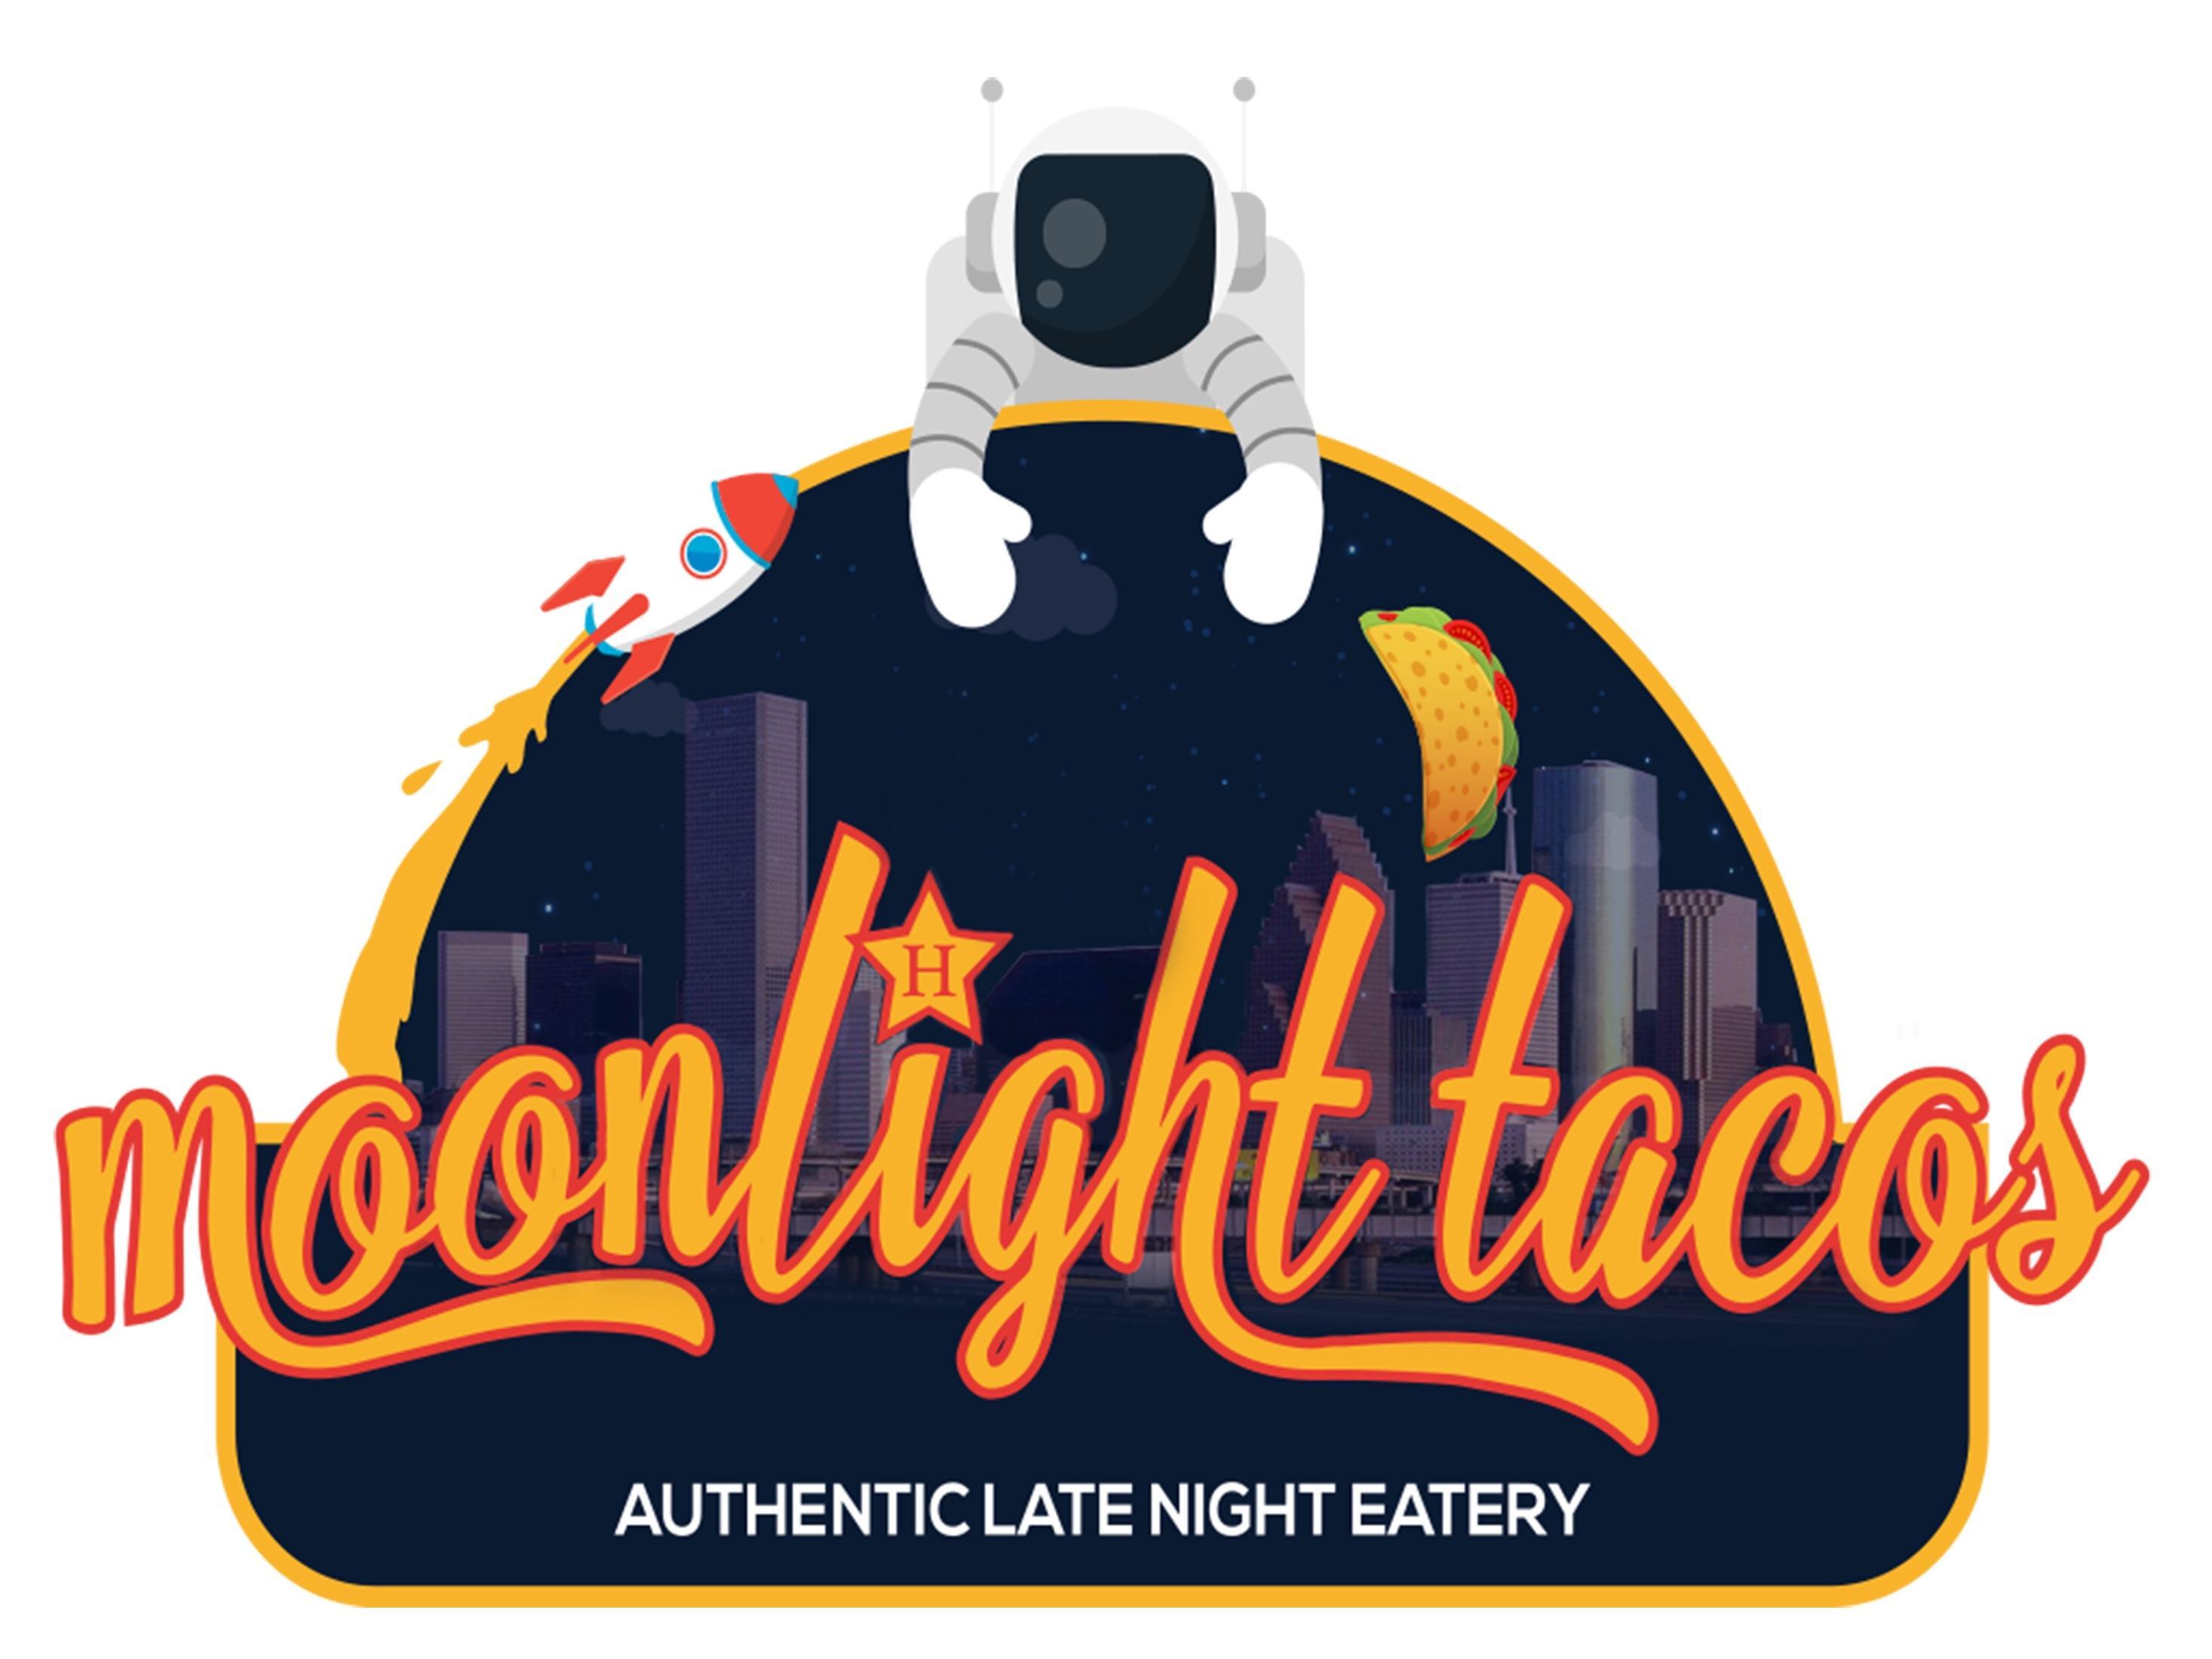 NASA Houston Logo - Updated Logo. Note Removing “authentic late night eatery”. Houston